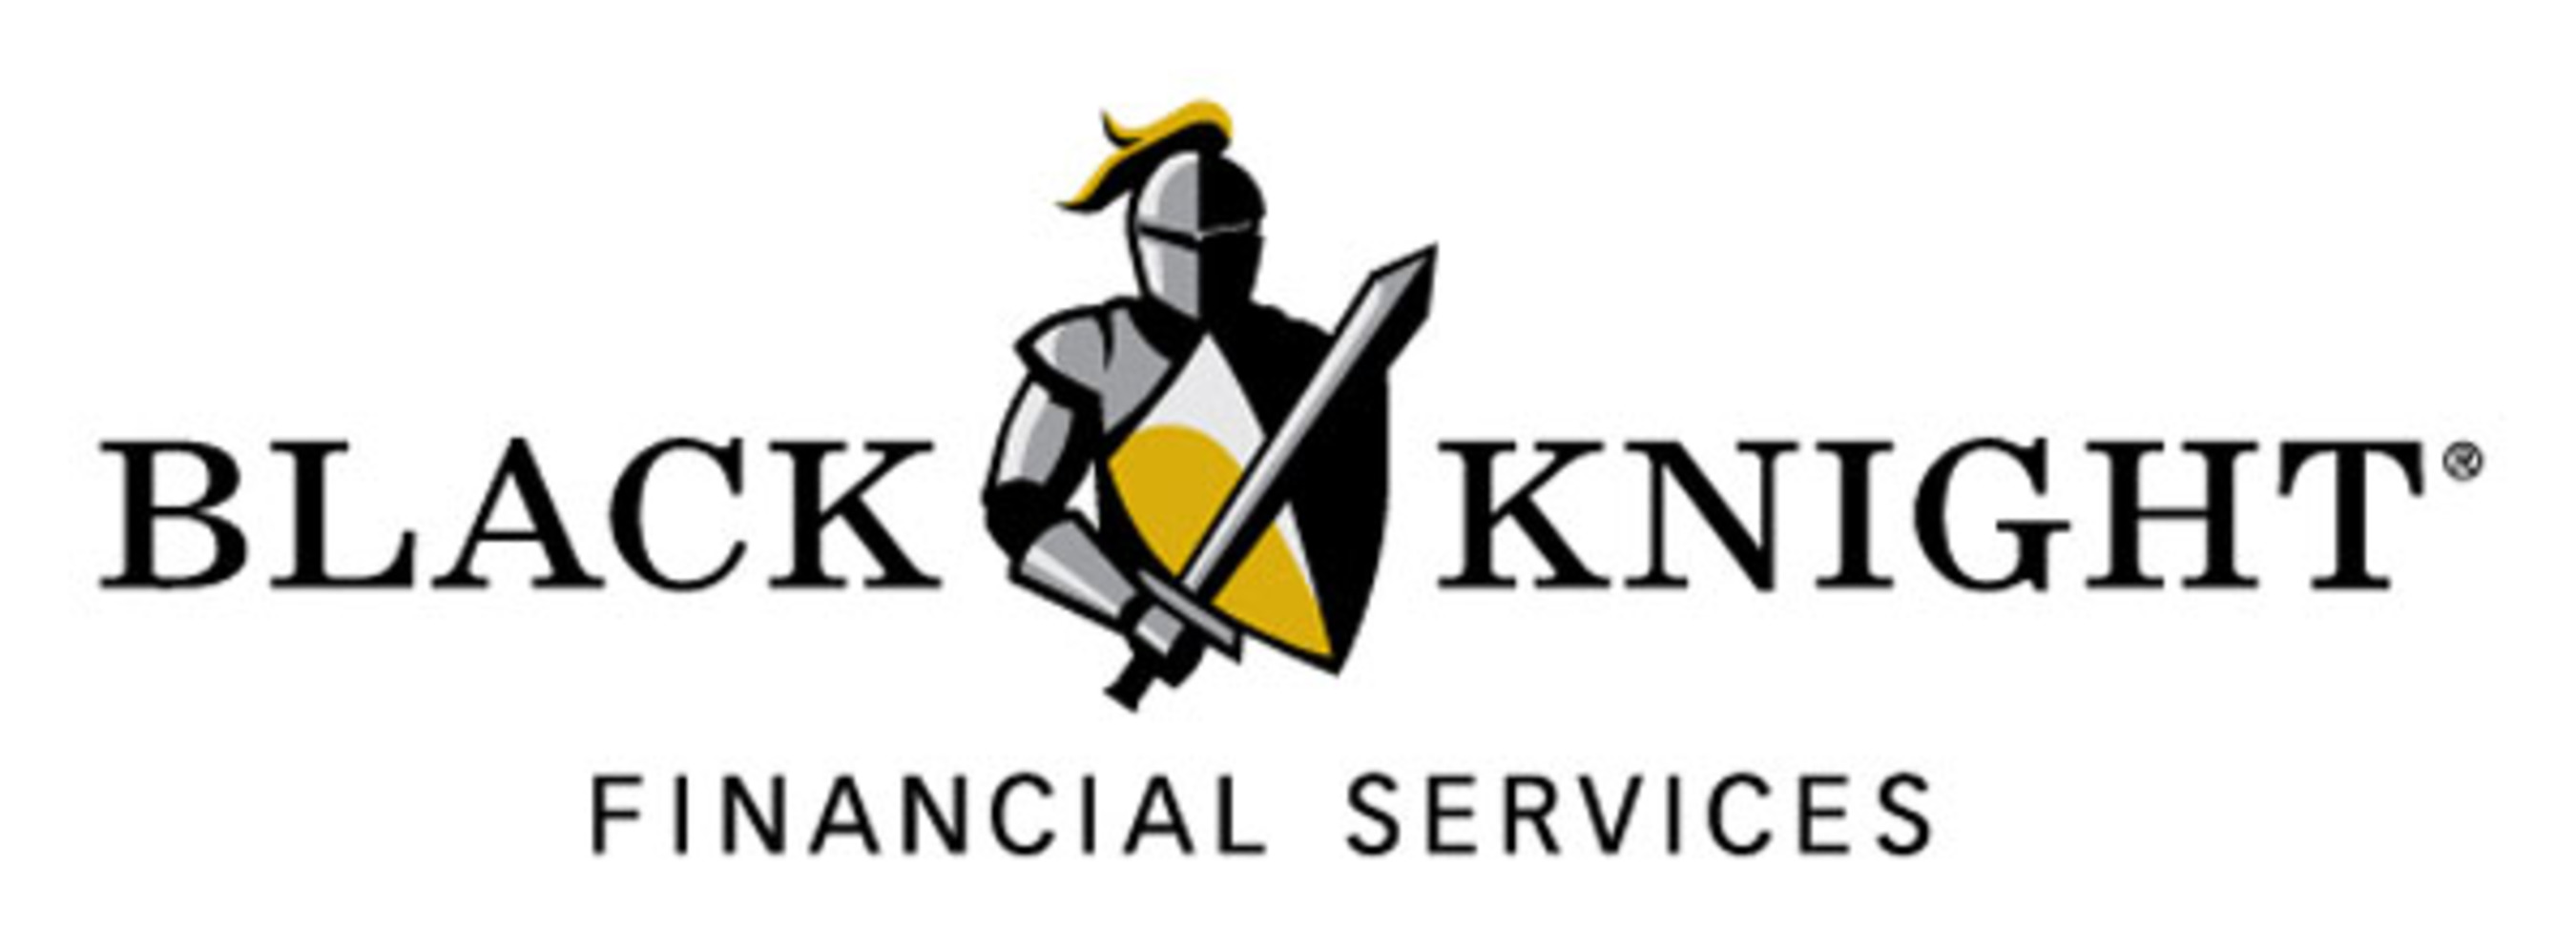 Black Knight Financial Services (NYSE: BKFS) logo